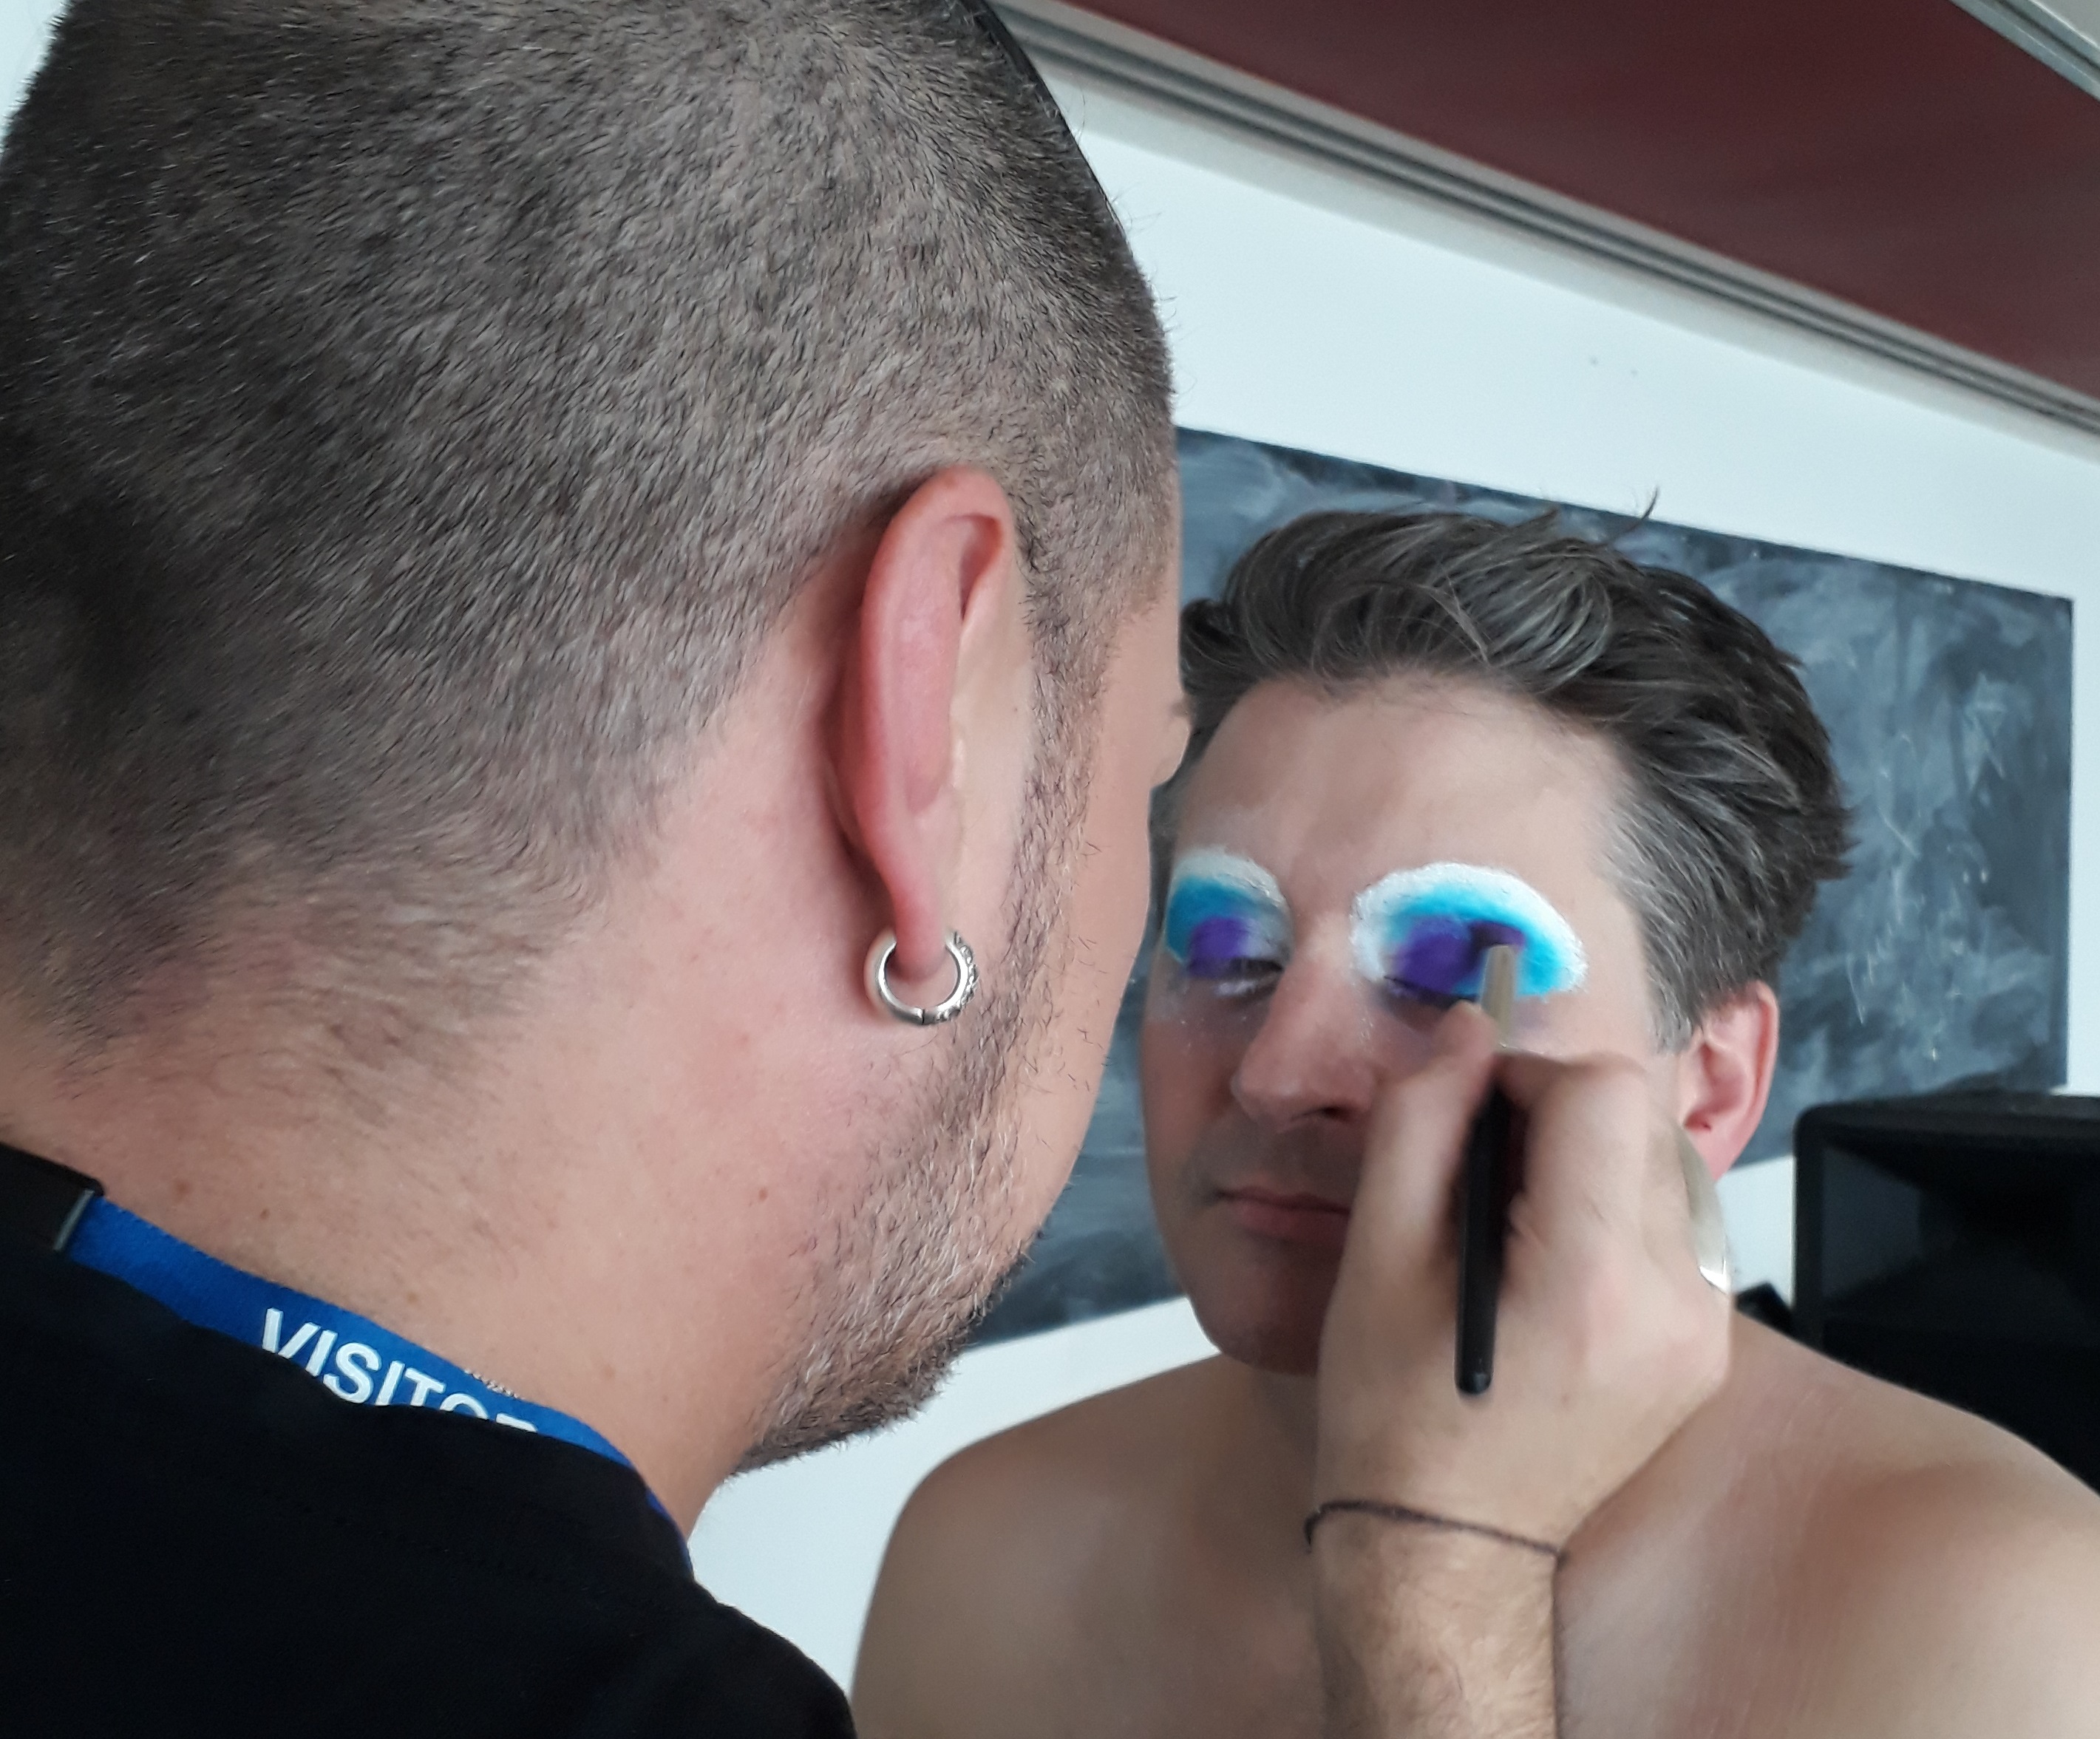 Ricky putting make-up on the Panto Dame